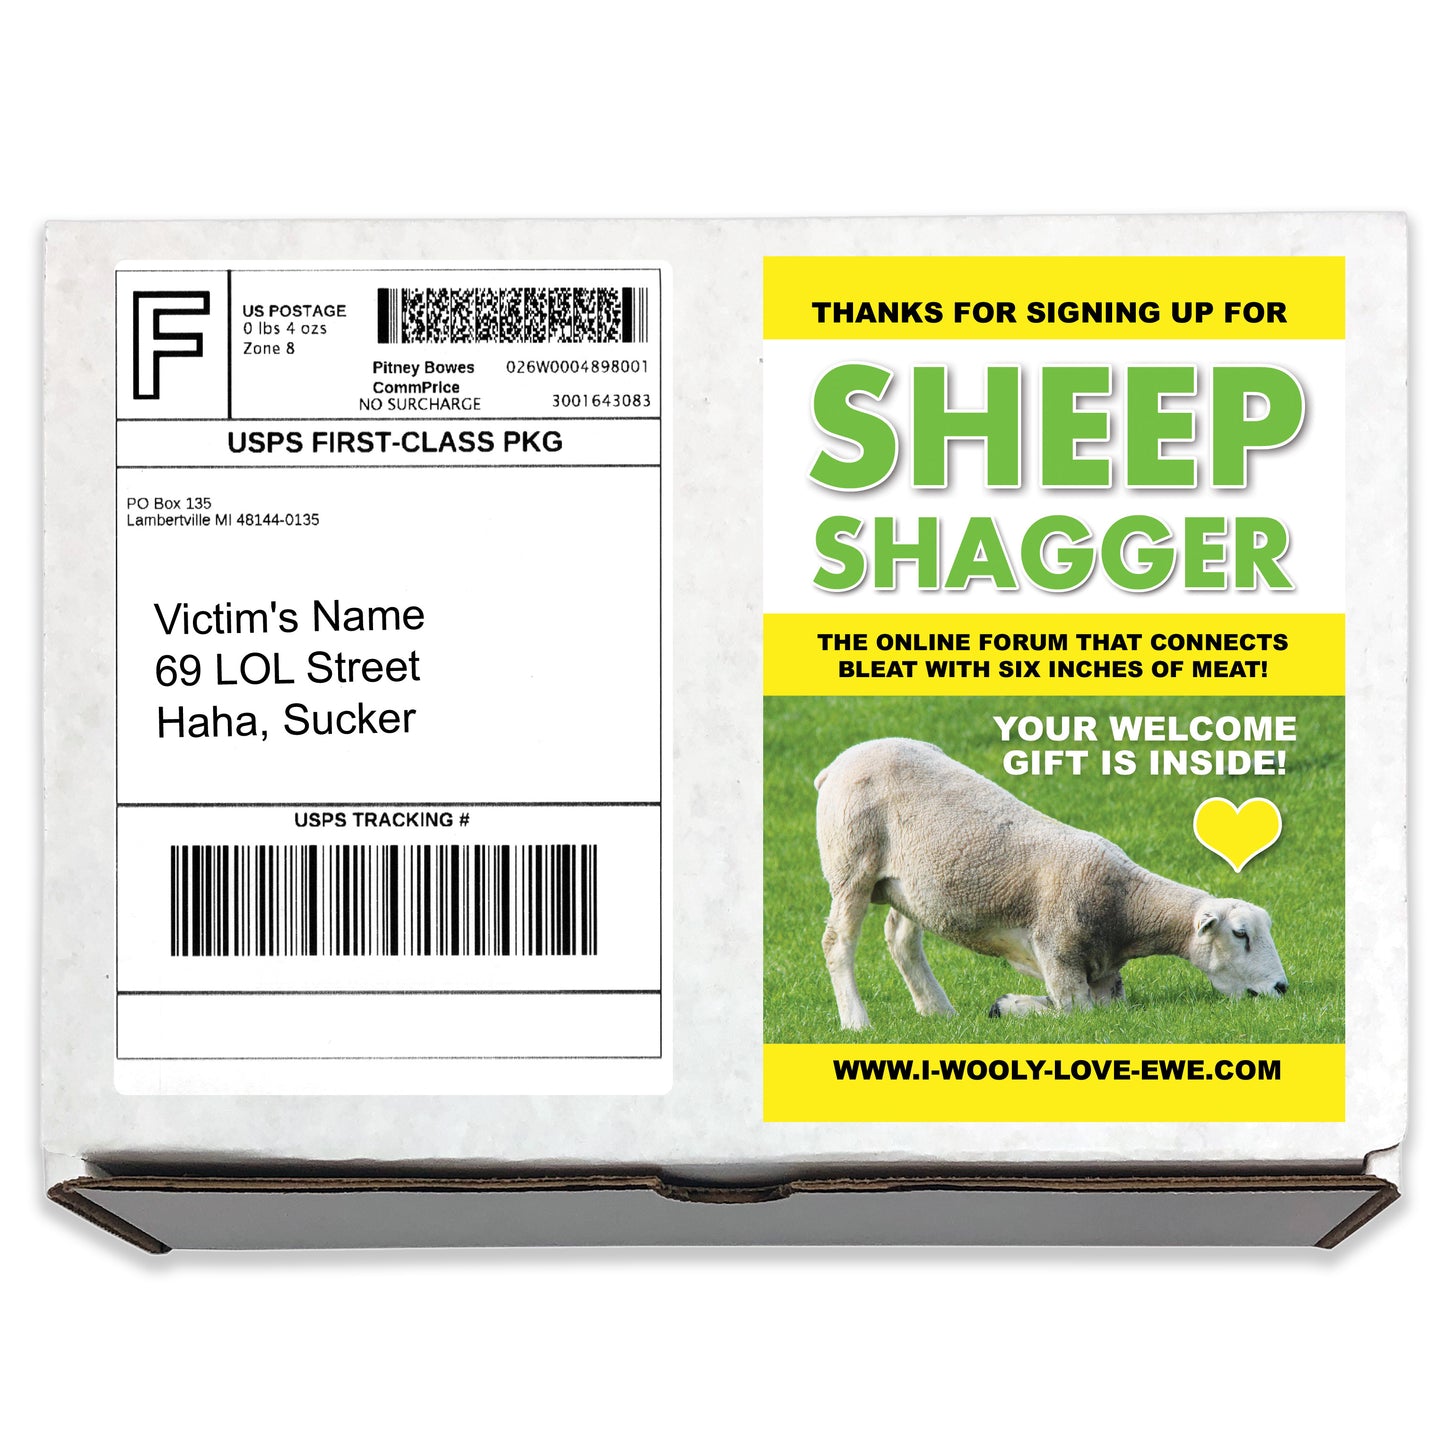 Sheep Shagger embarrassing prank box